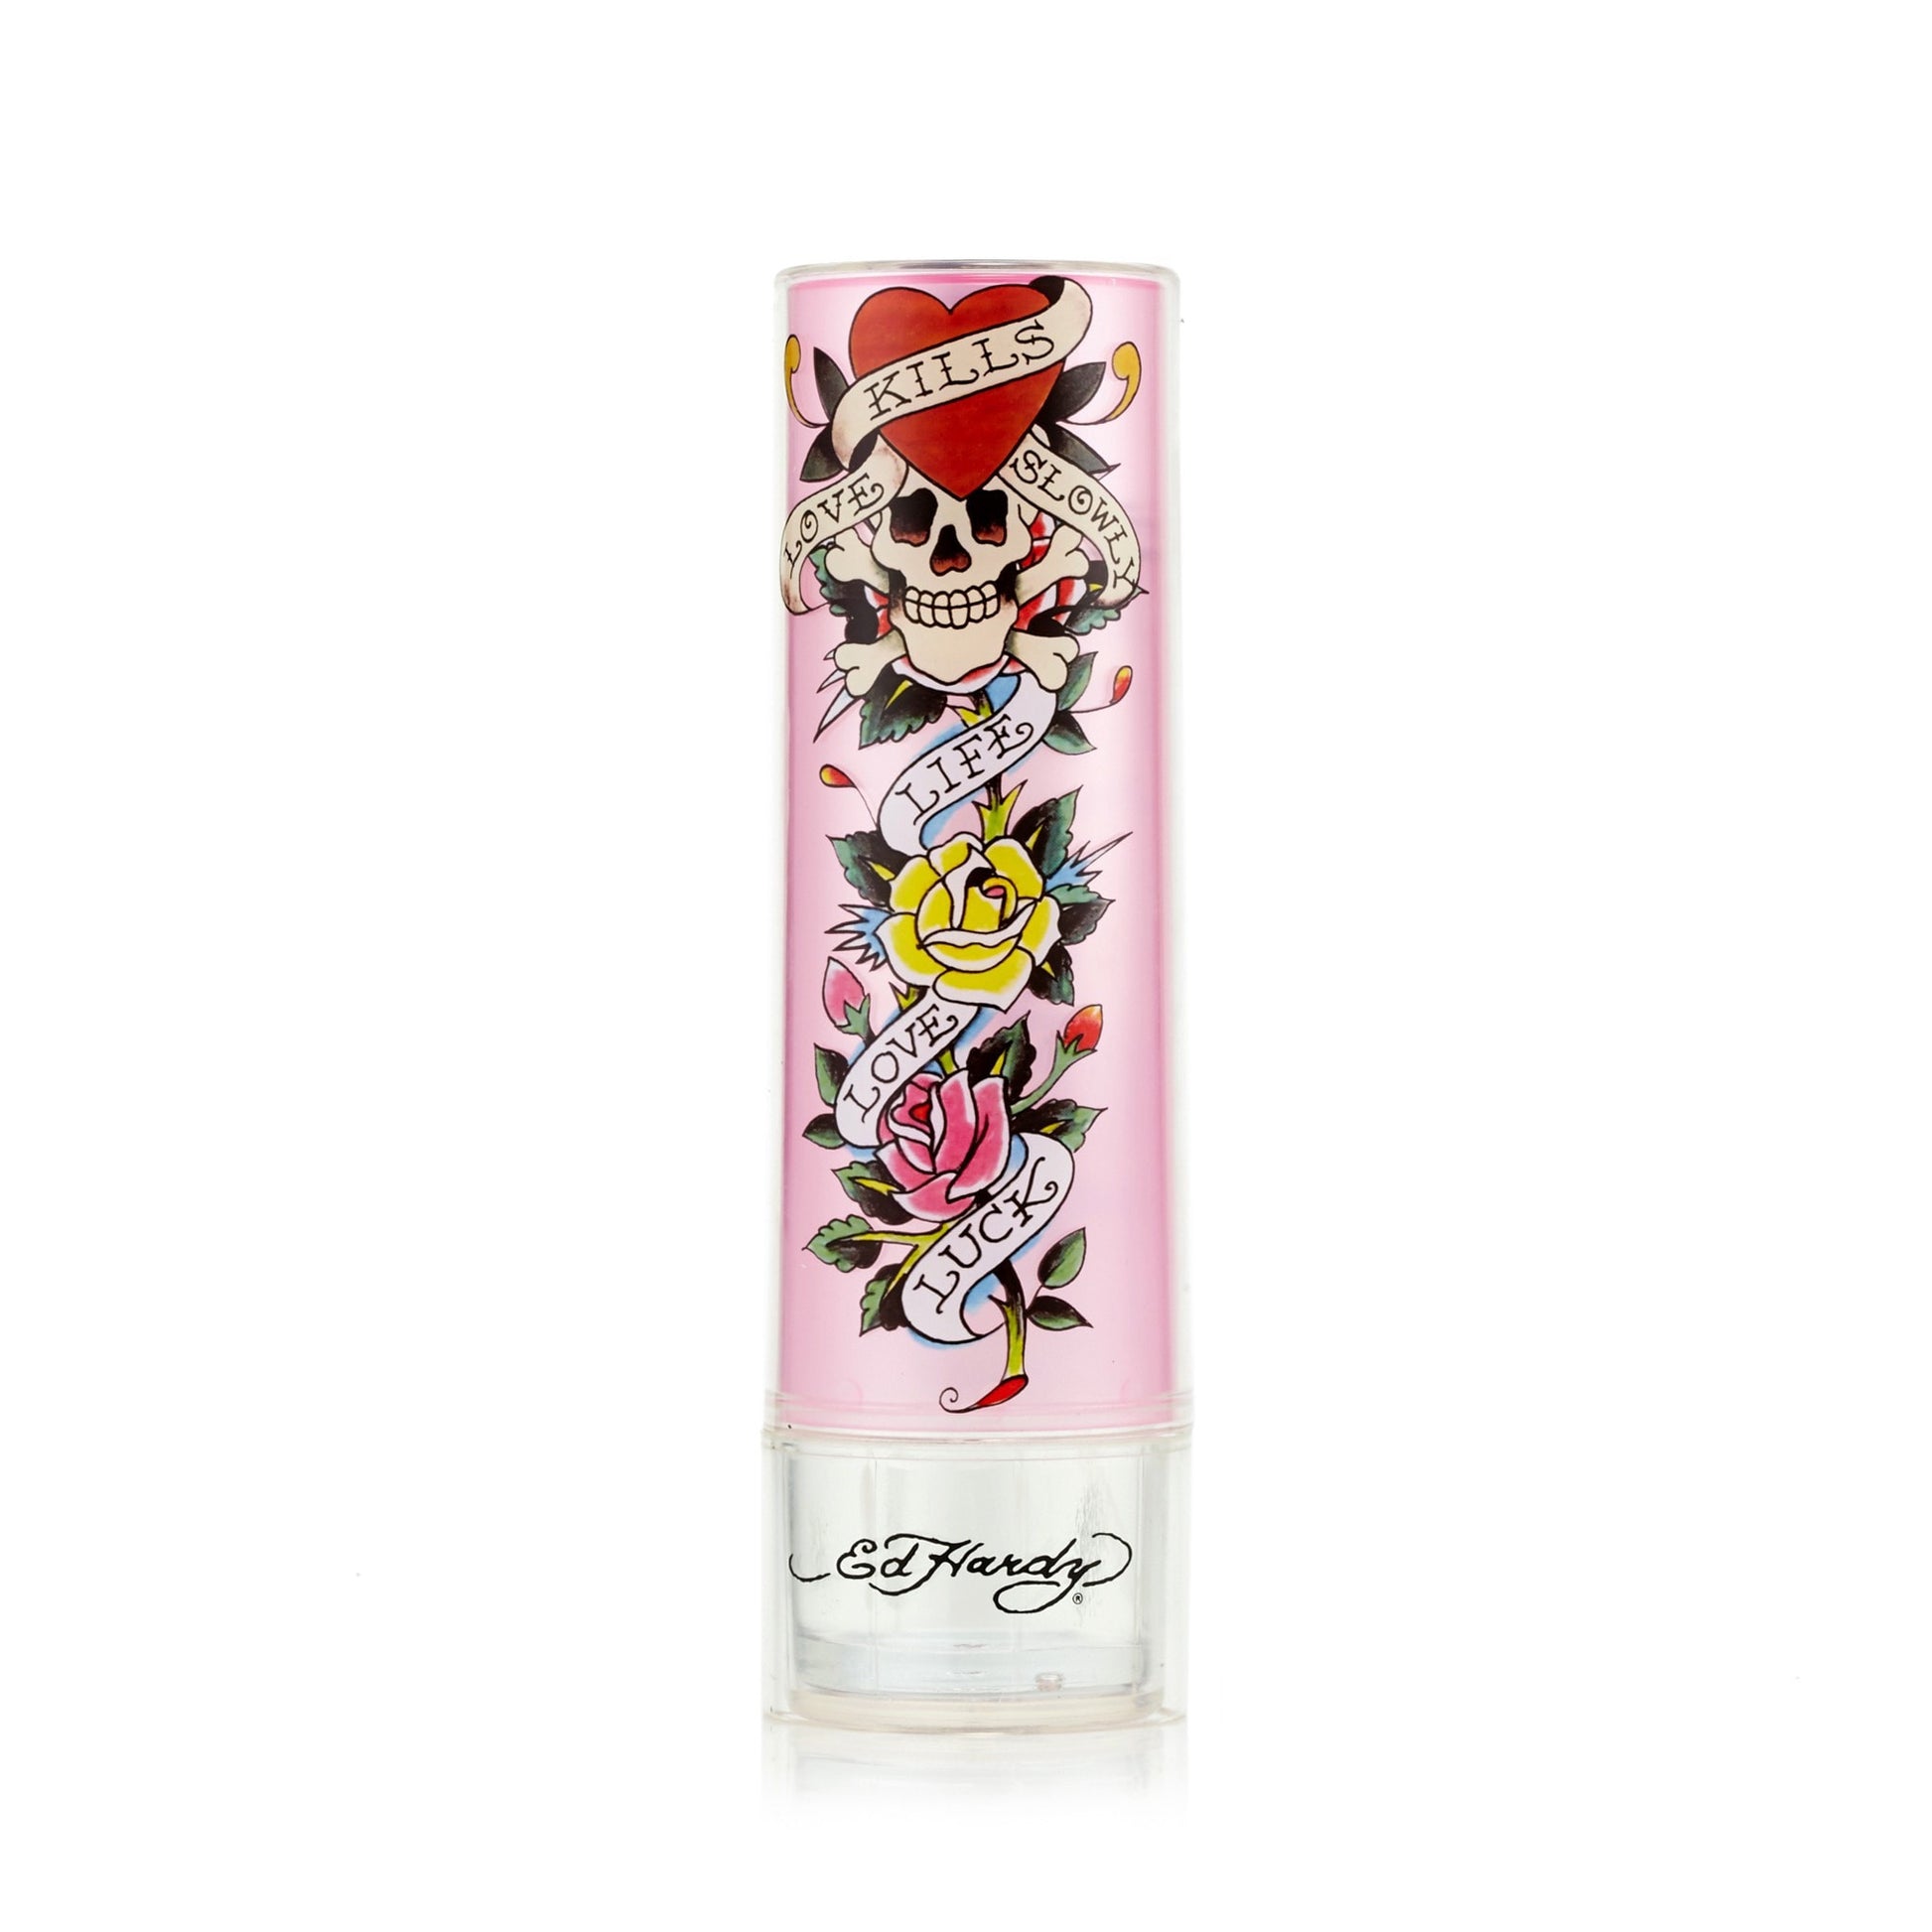 Ed Hardy Eau de Parfum Spray for Women by Christian Audigier 6.7 oz. Click to open in modal